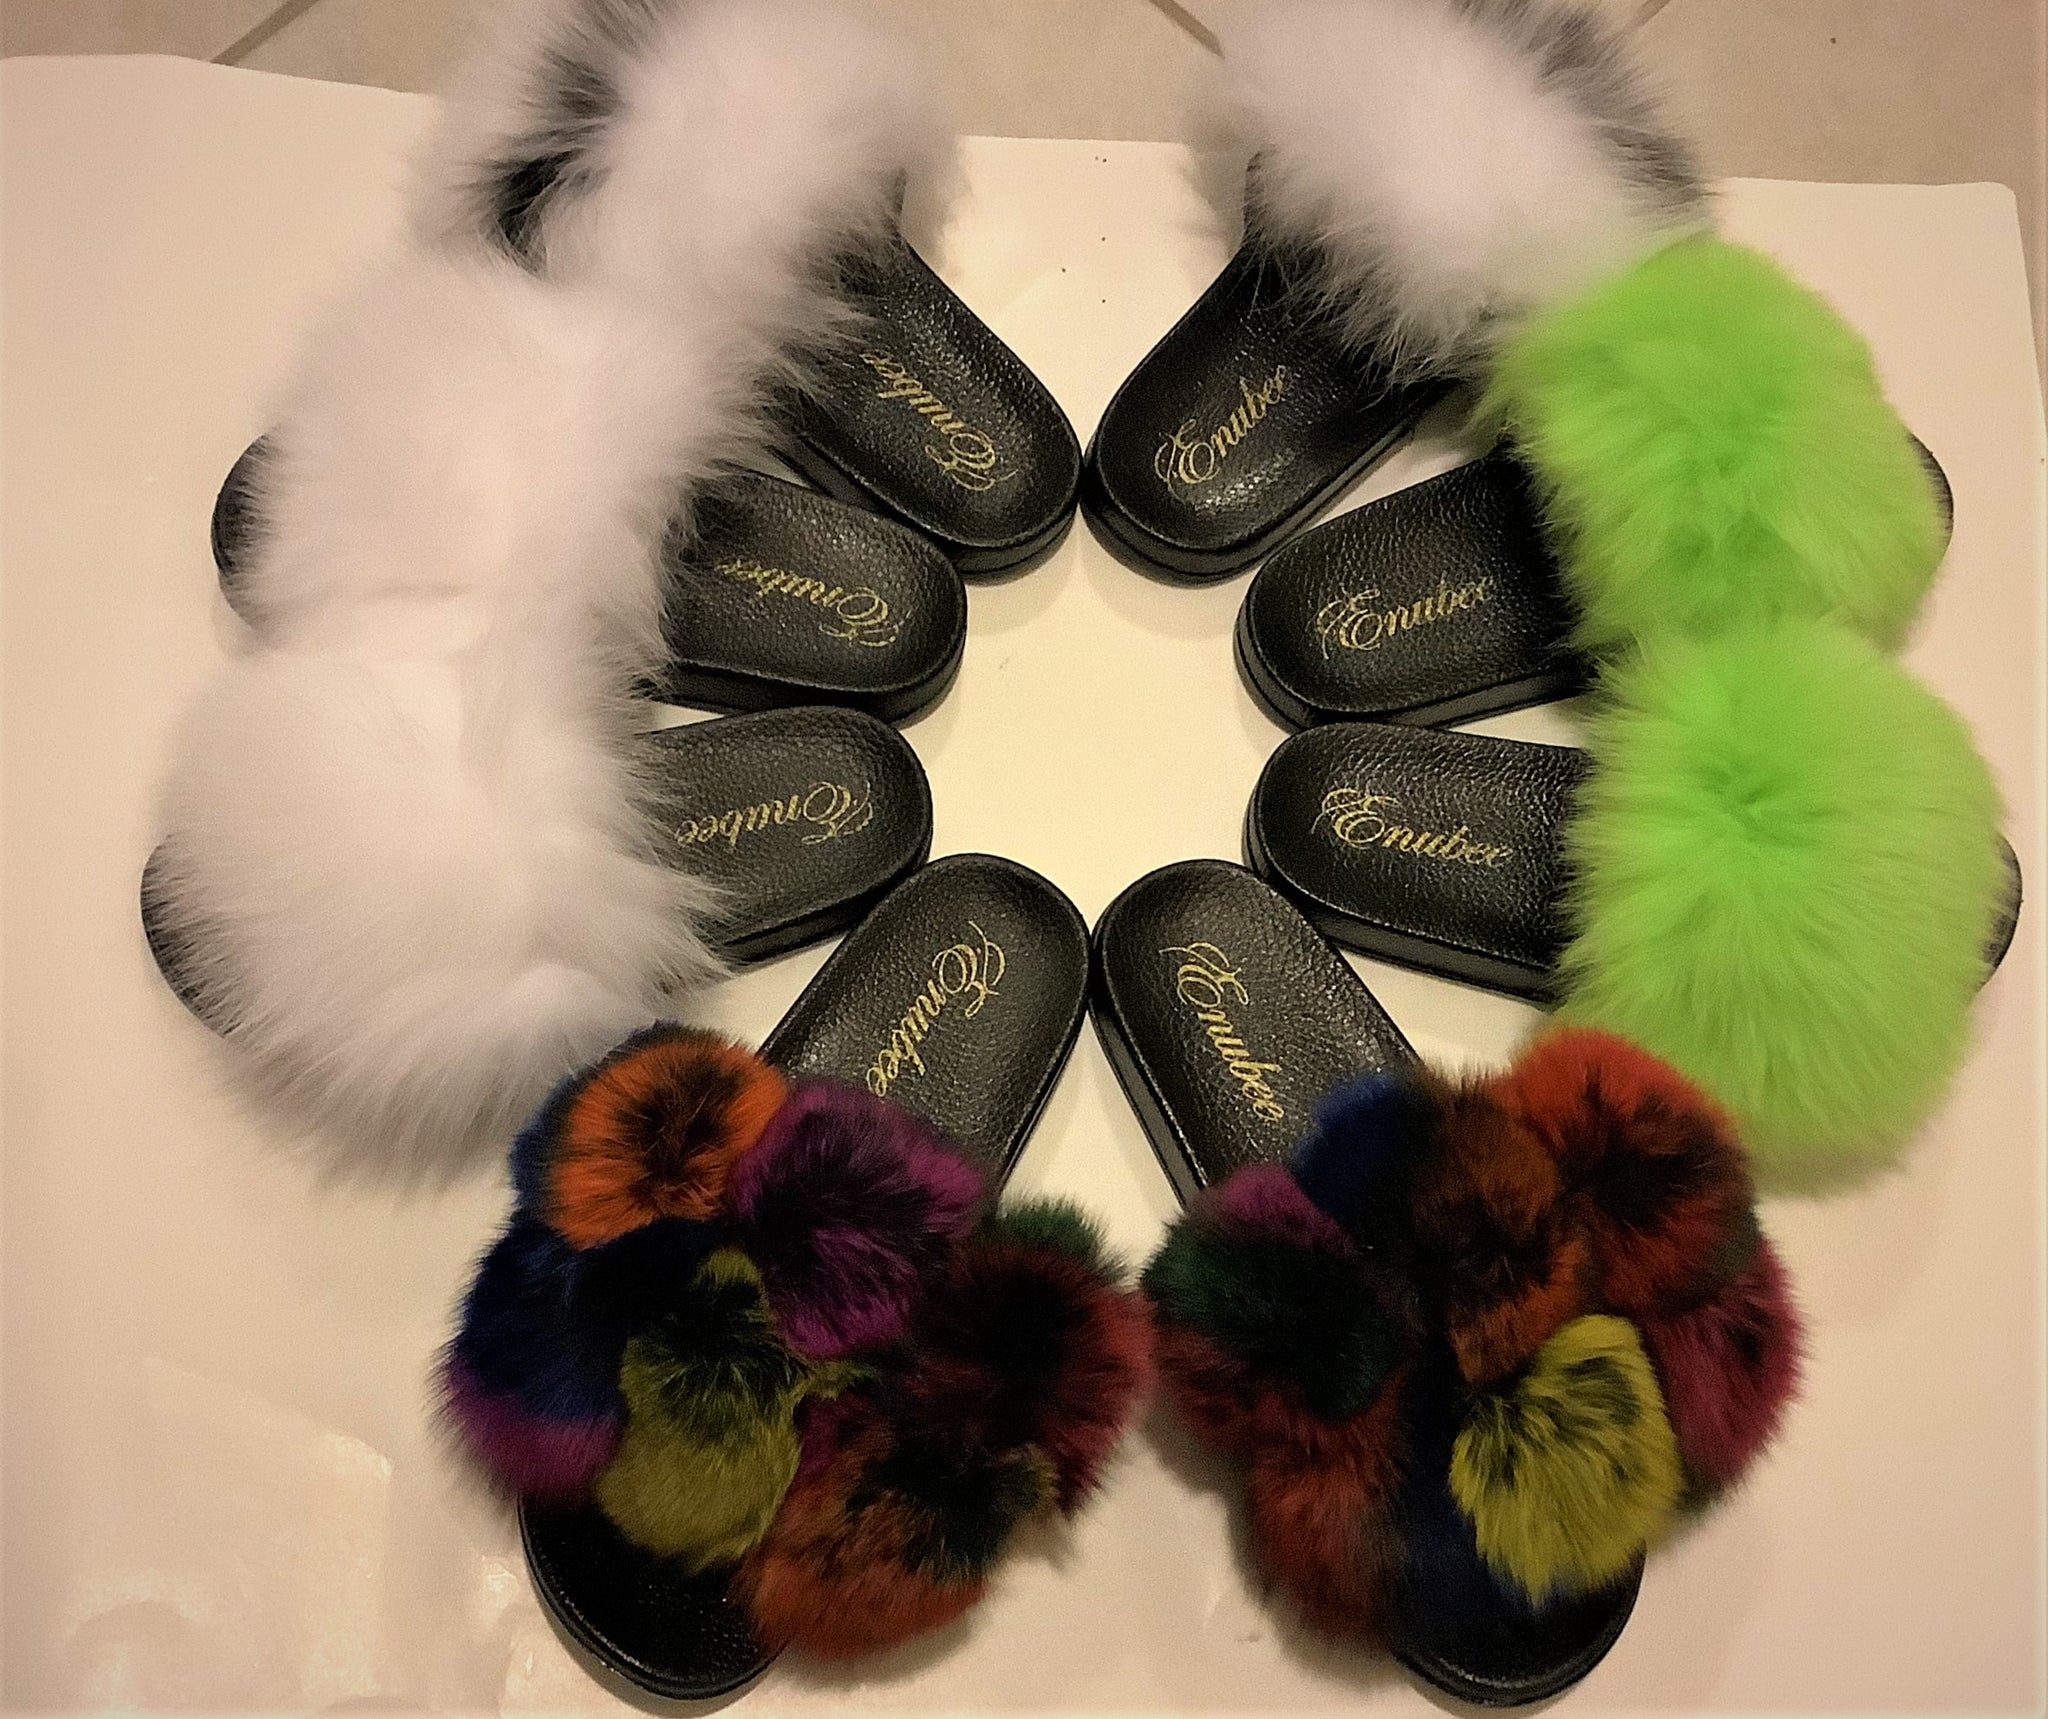 100% Fur Slippers 2 Tone colors! White/Black